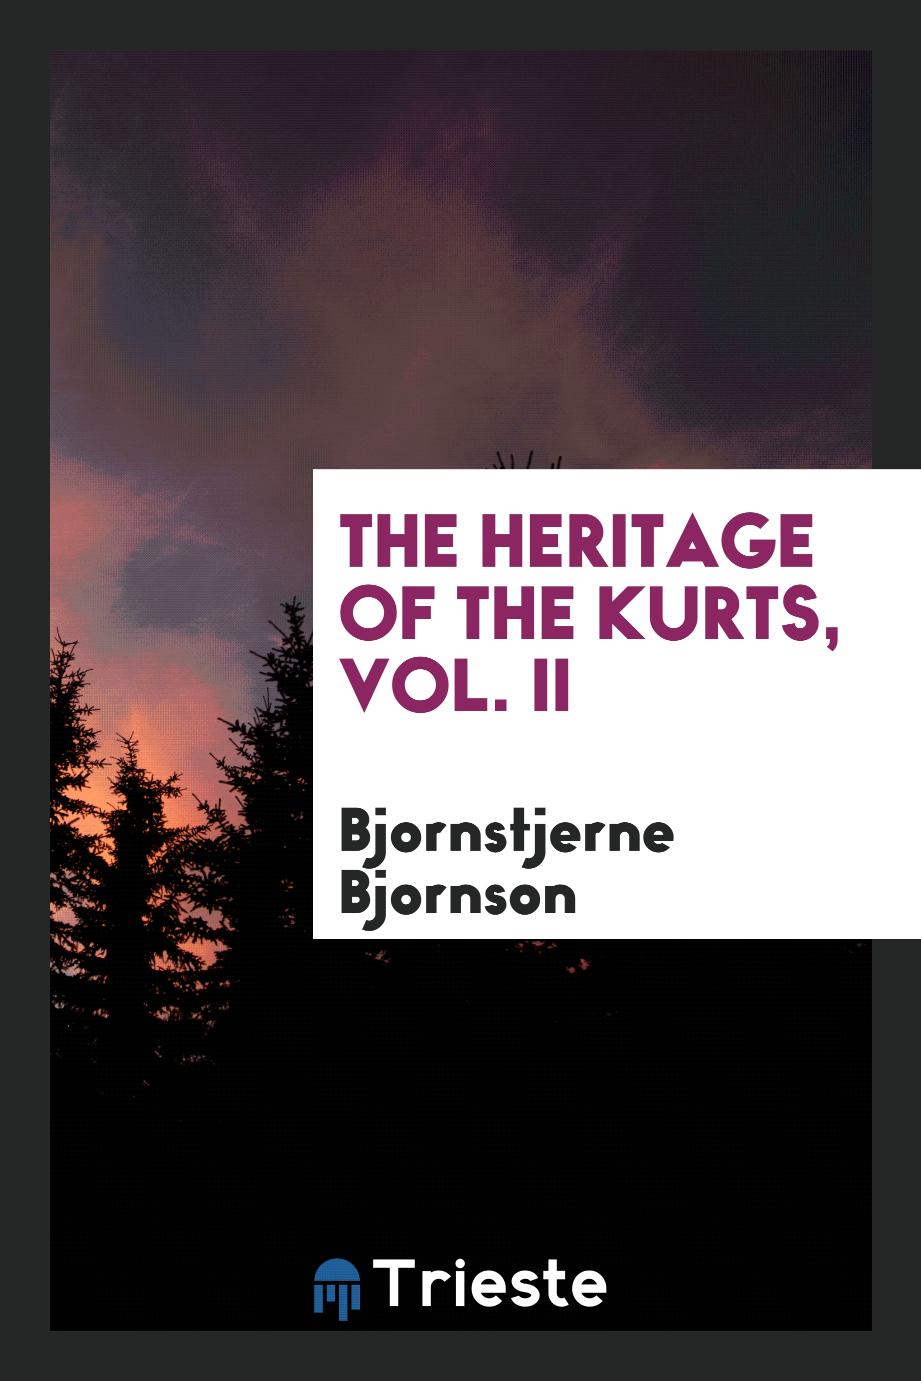 The heritage of the kurts, Vol. II